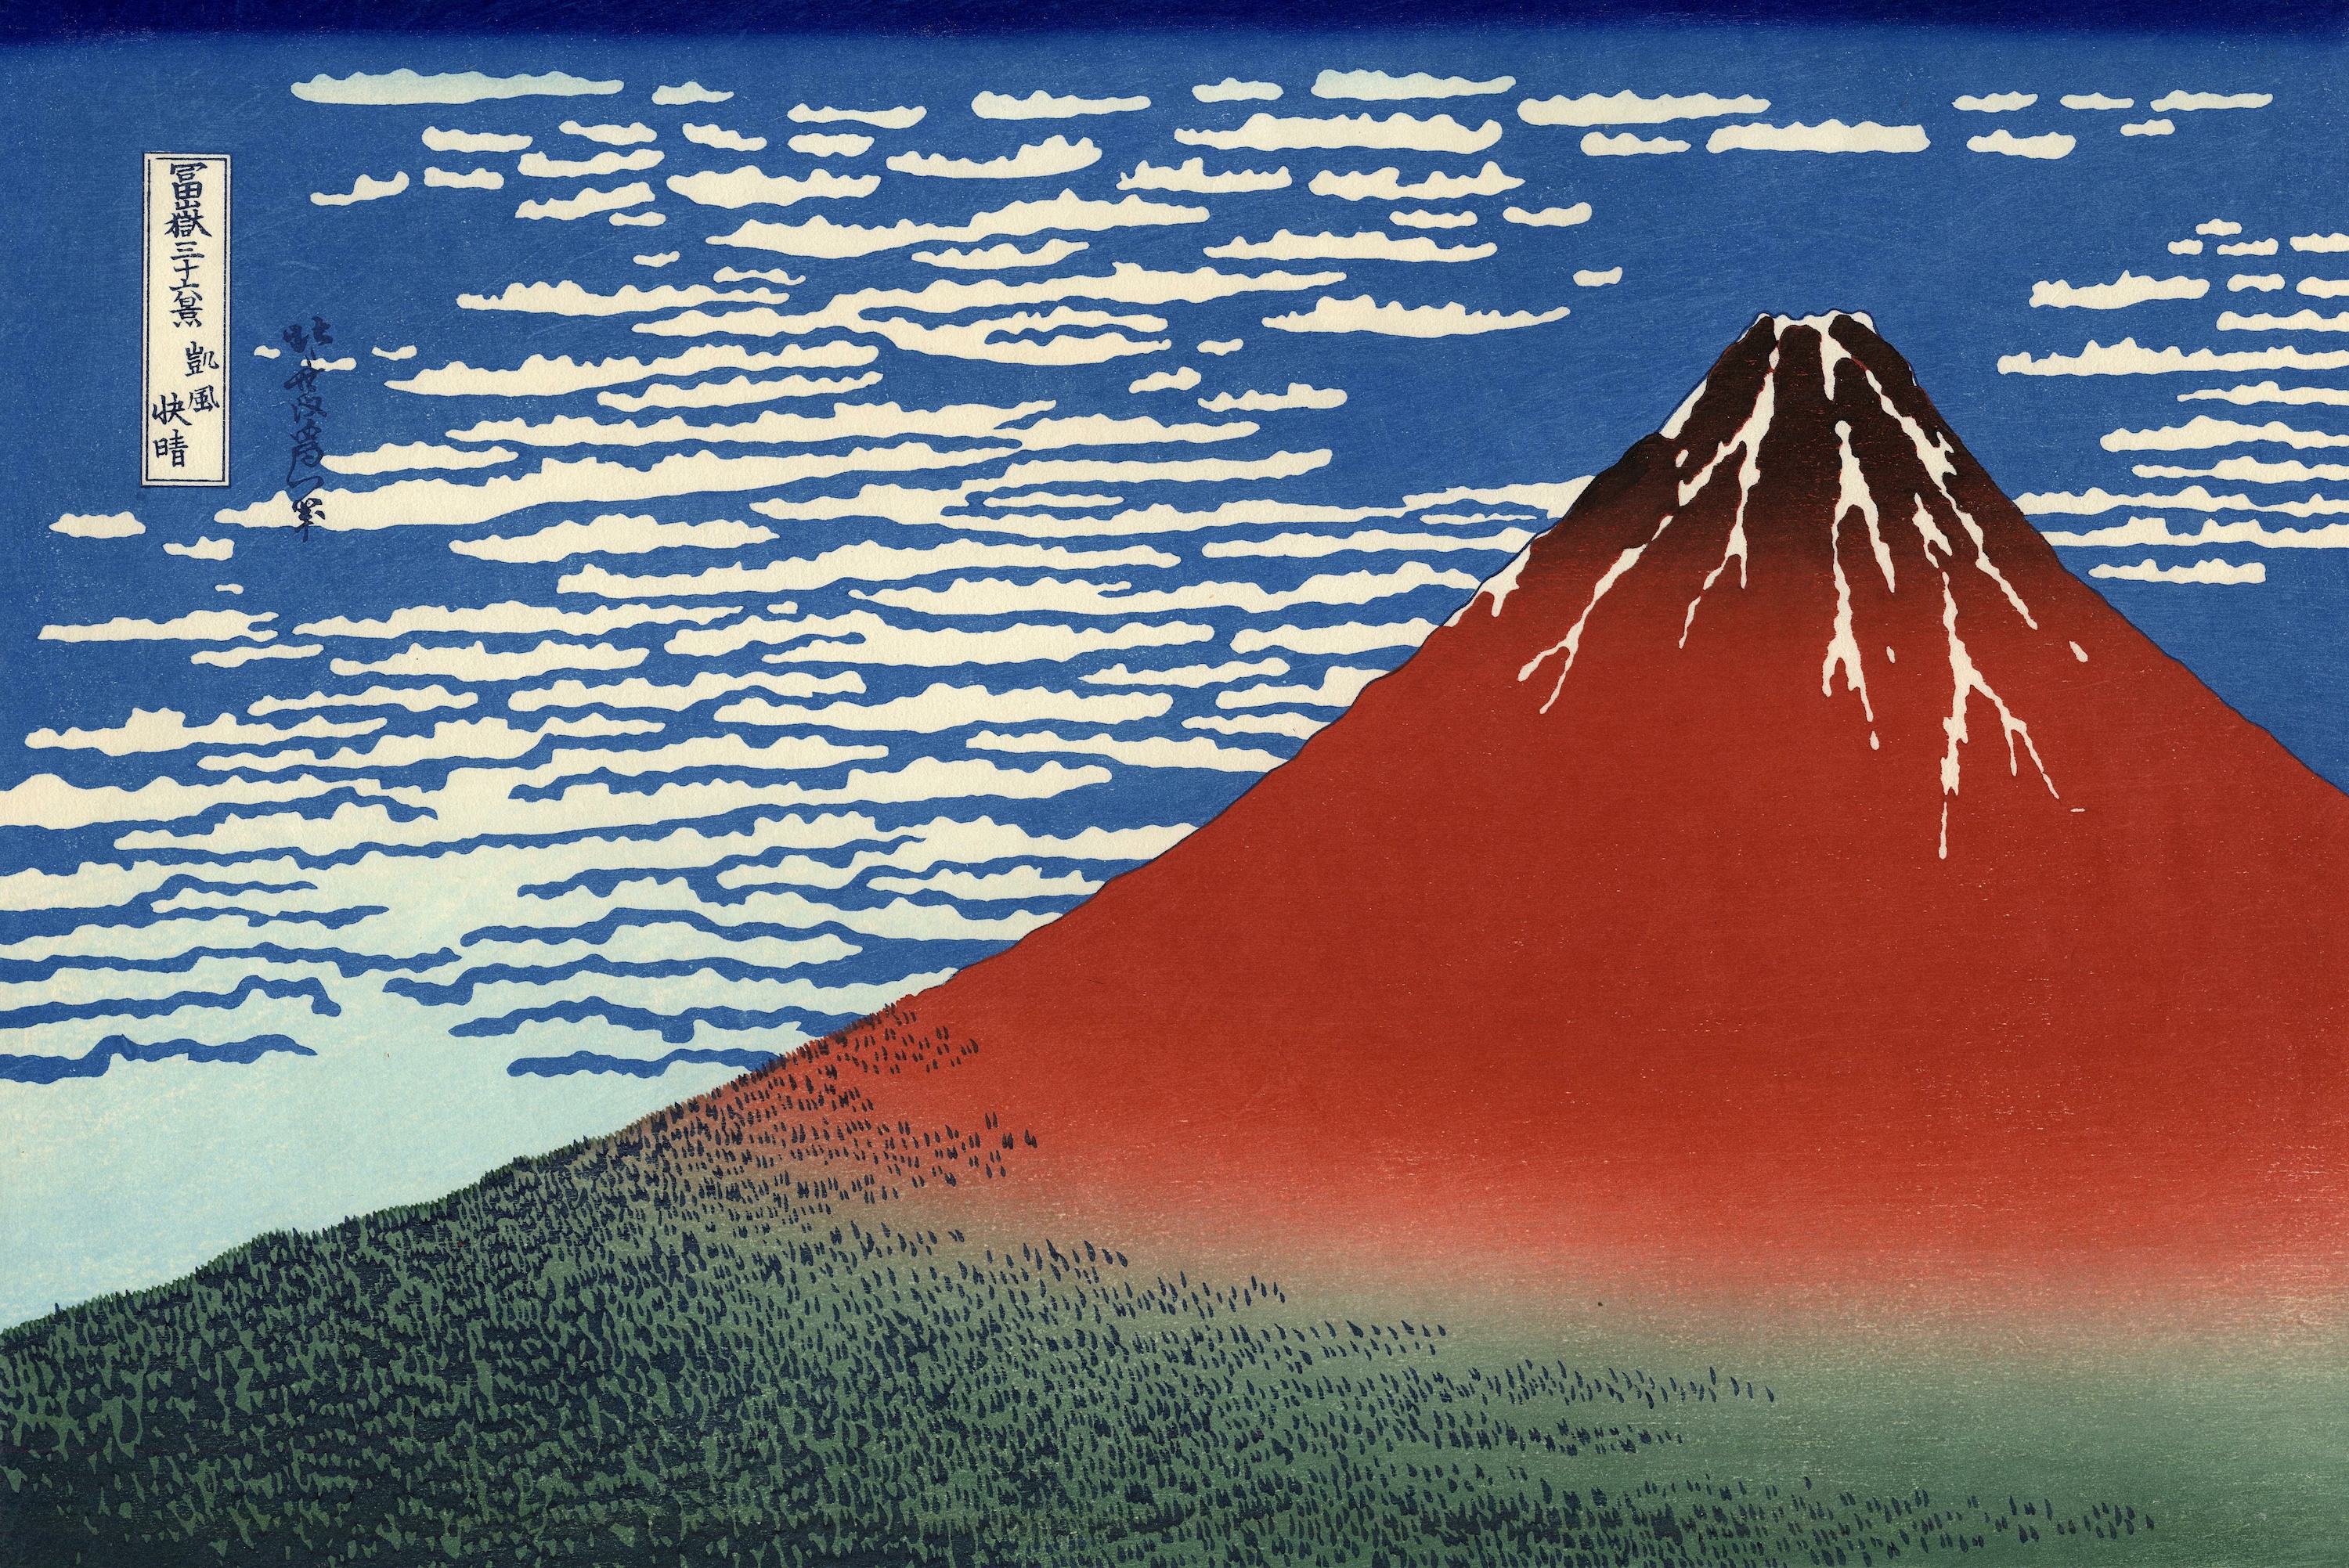 Vent du sud, ciel clair by Katsushika Hokusai - v. 1830 - 26.72 x 38 cm British Museum